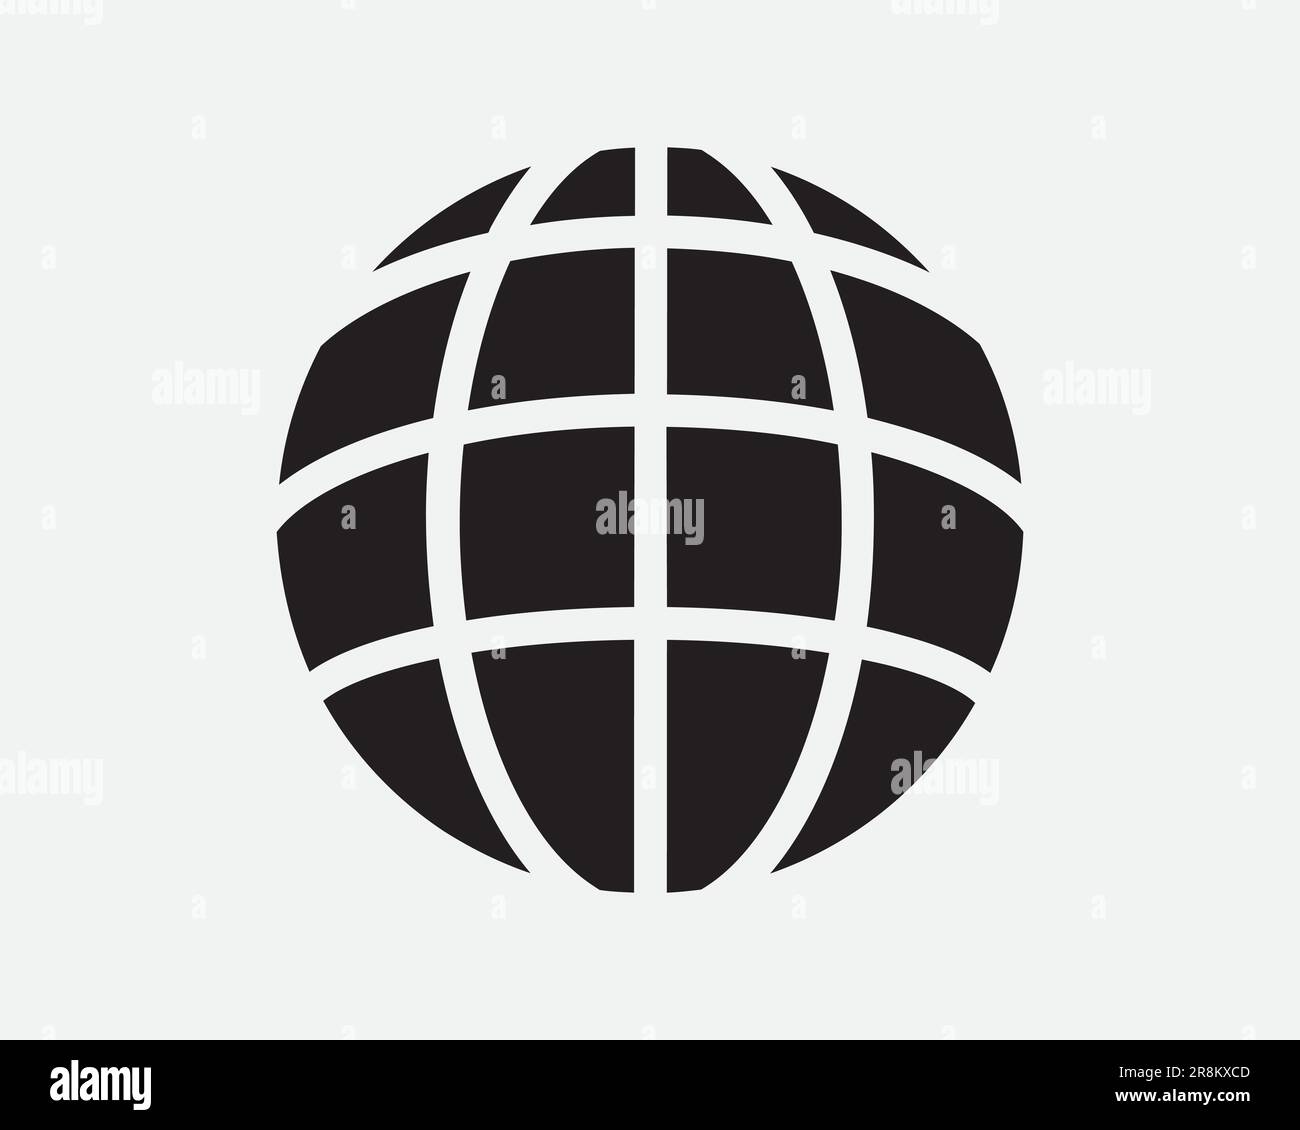 Globus-Symbol. Erde Global Planet Worldwide Sphere Round Circular Wire 3D Shape Black White Sign Symbol Illustration Artwork Graphic Clipart EPS Vector Stock Vektor